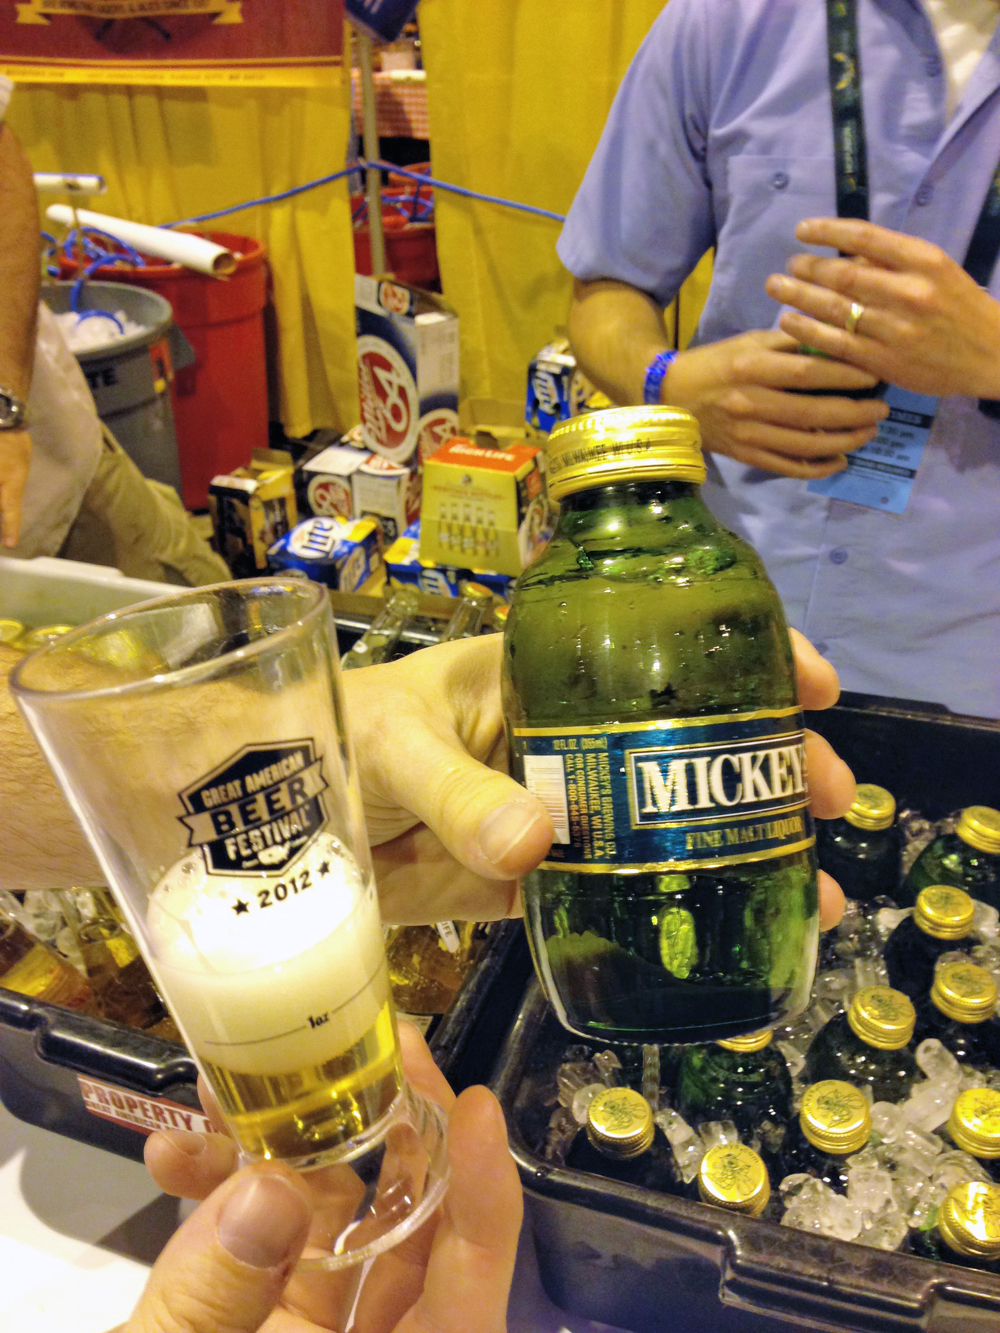 Mickey's Malt Liquor